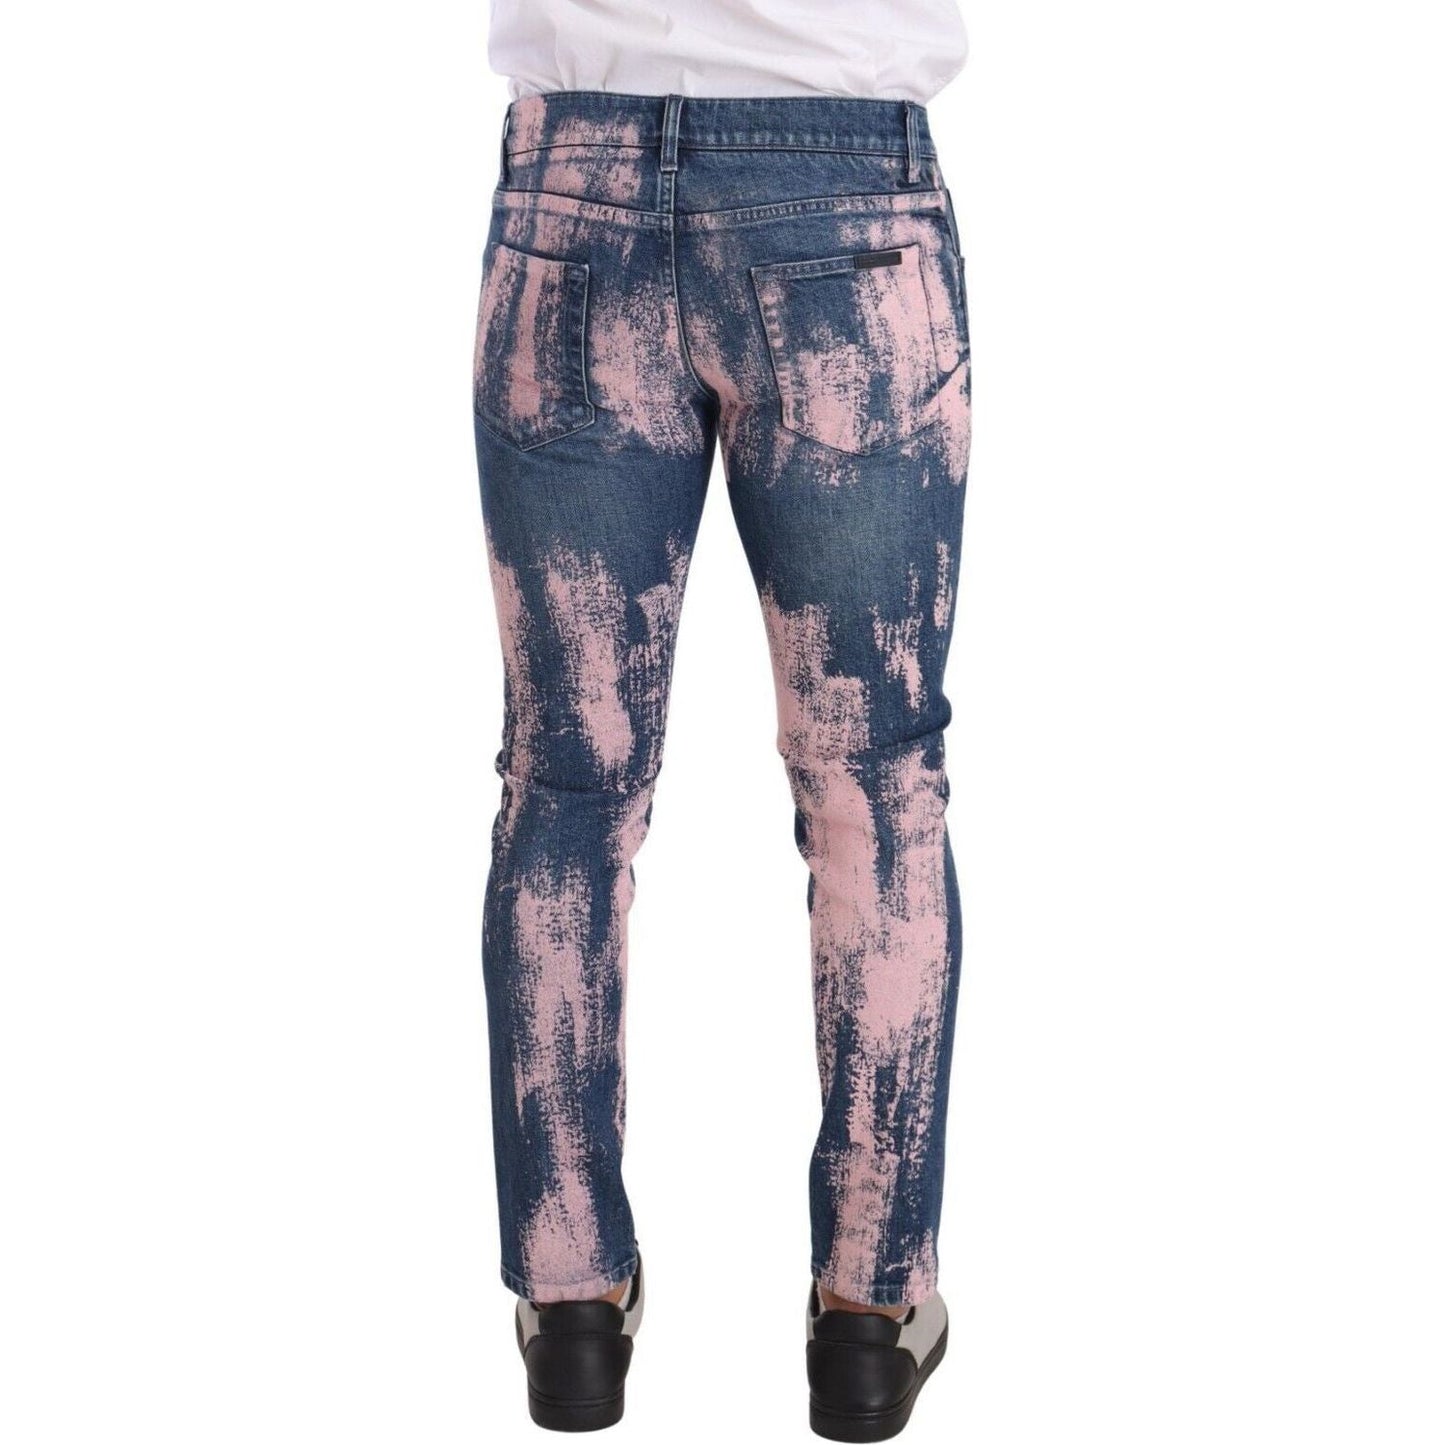 Dolce & Gabbana Elegant Skinny Slim Fit Denim Jeans in Tie Dye blue-pink-tie-dye-cotton-skinny-denim-jeans